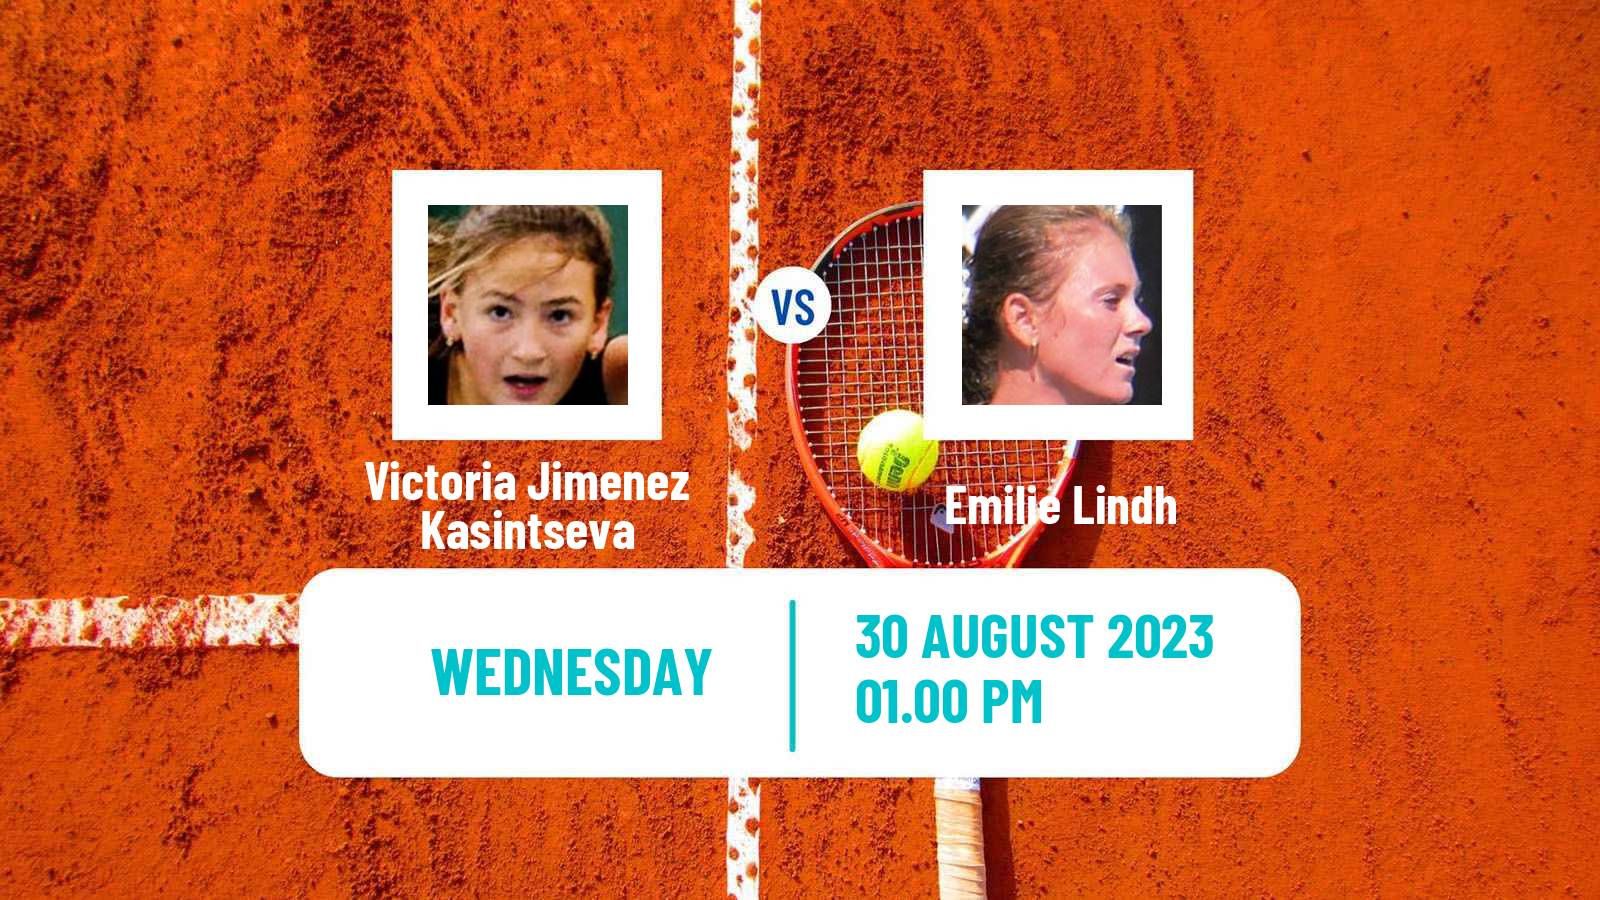 Tennis ITF W25 Valladolid Women Victoria Jimenez Kasintseva - Emilie Lindh